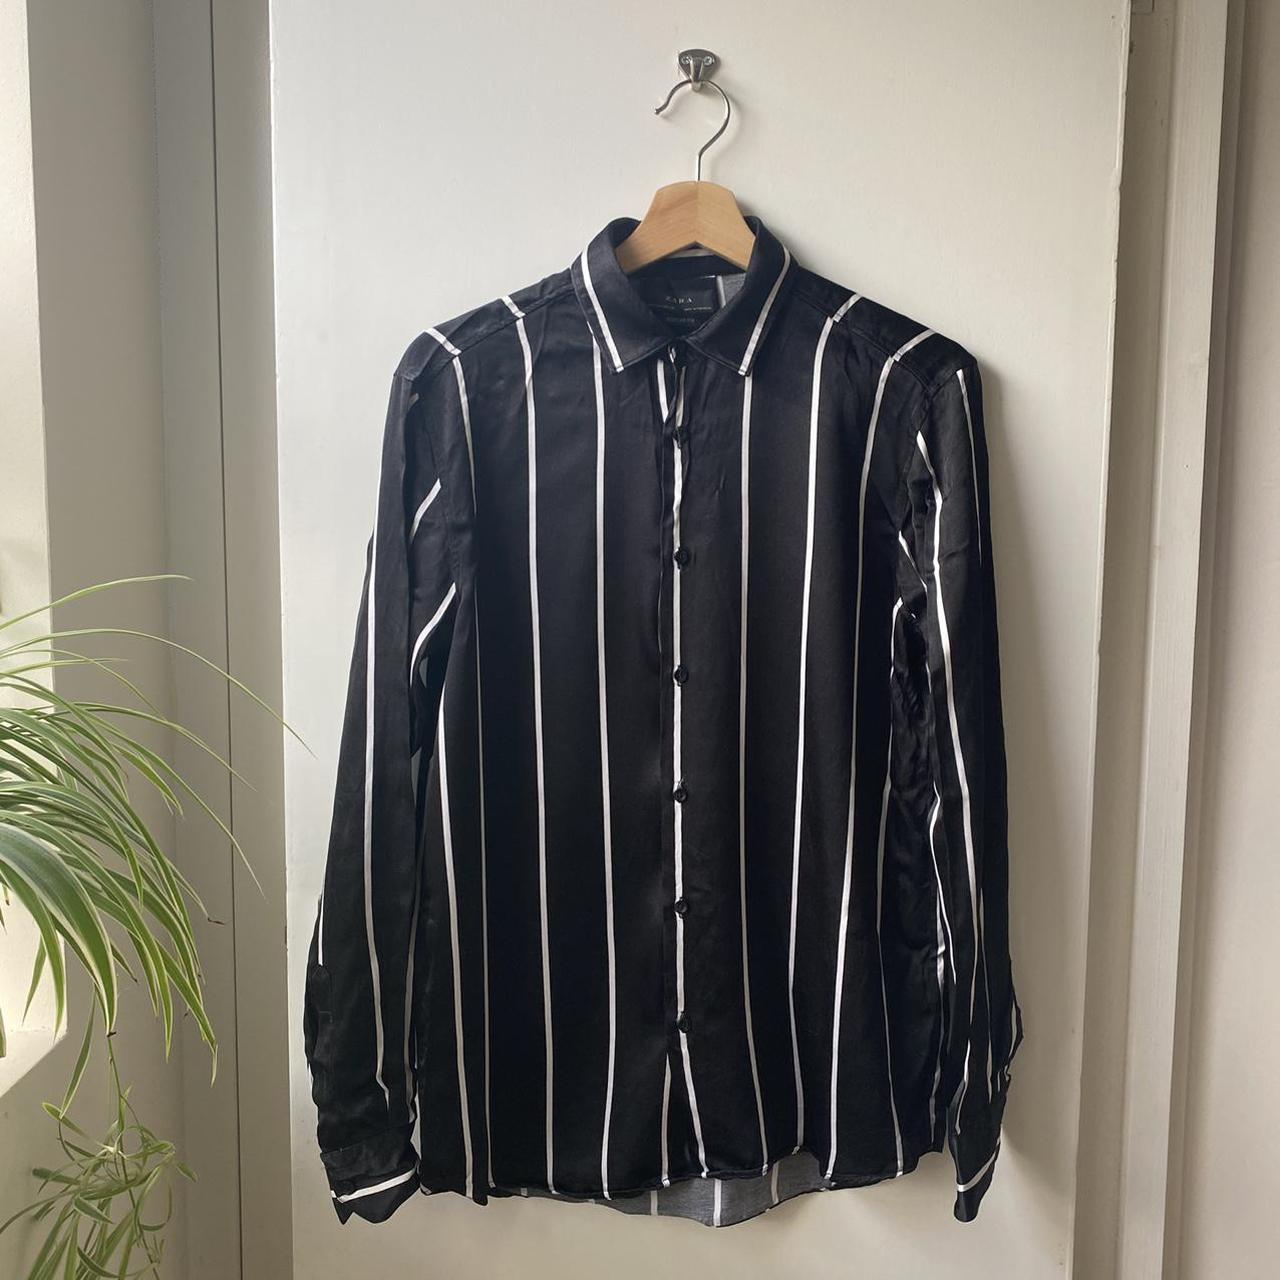 Zara silk black and white striped long sleeved shirt - Depop